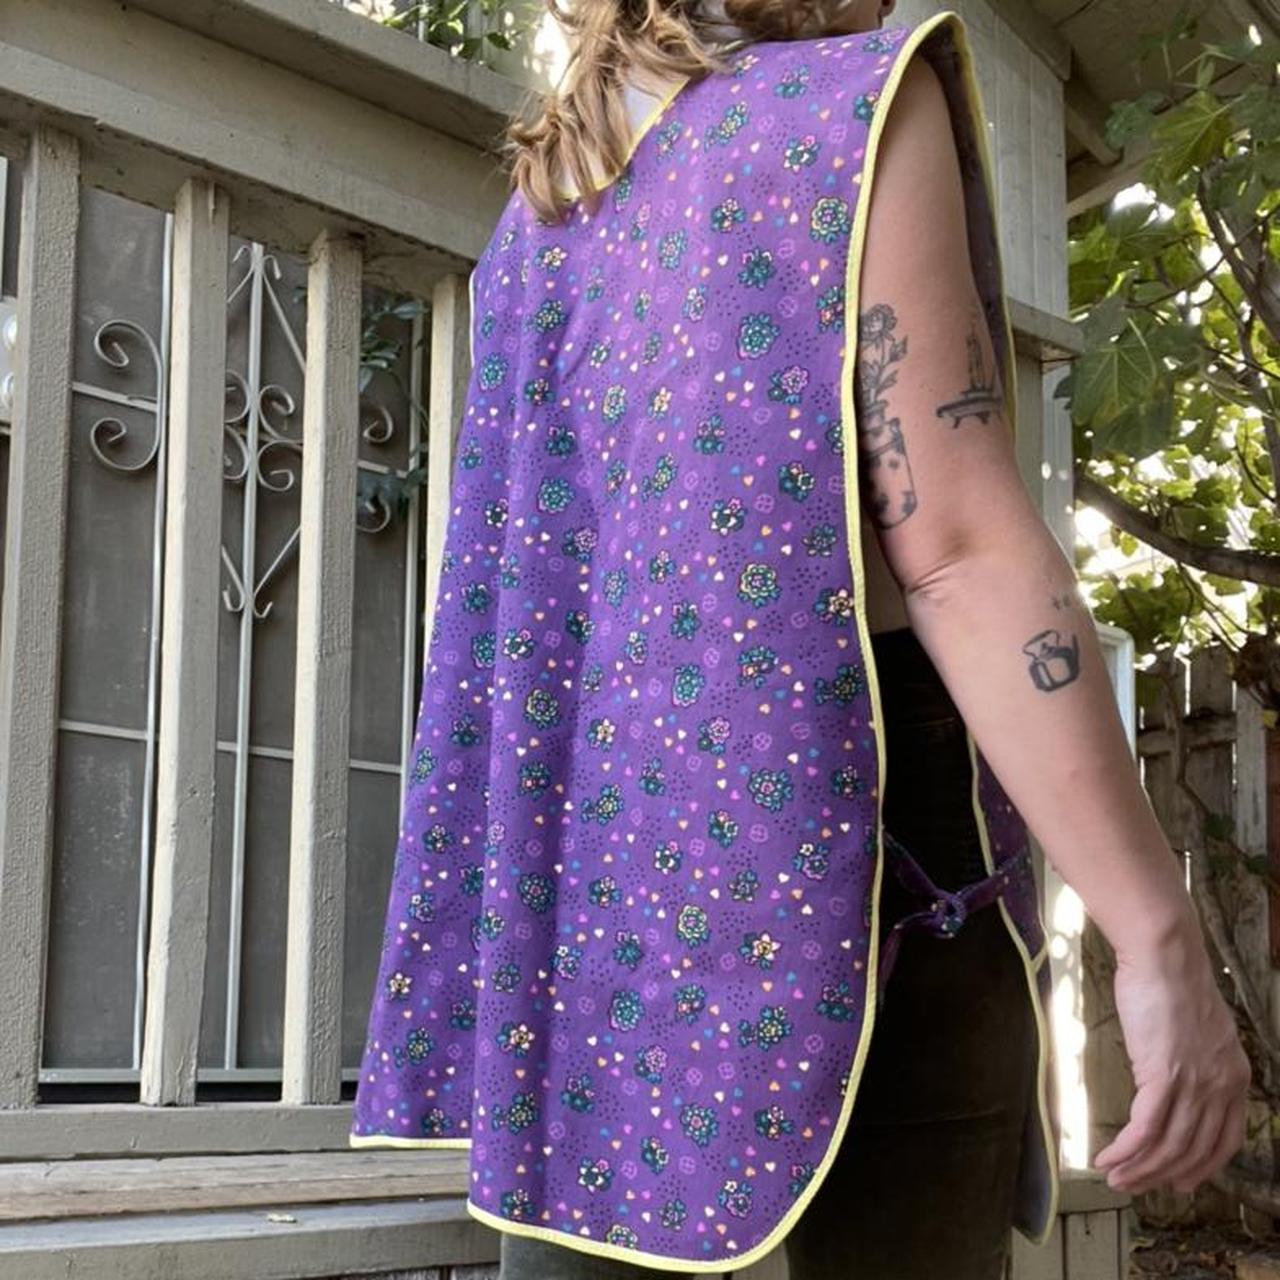 Product Image 3 - vintage purple floral artist smock

-